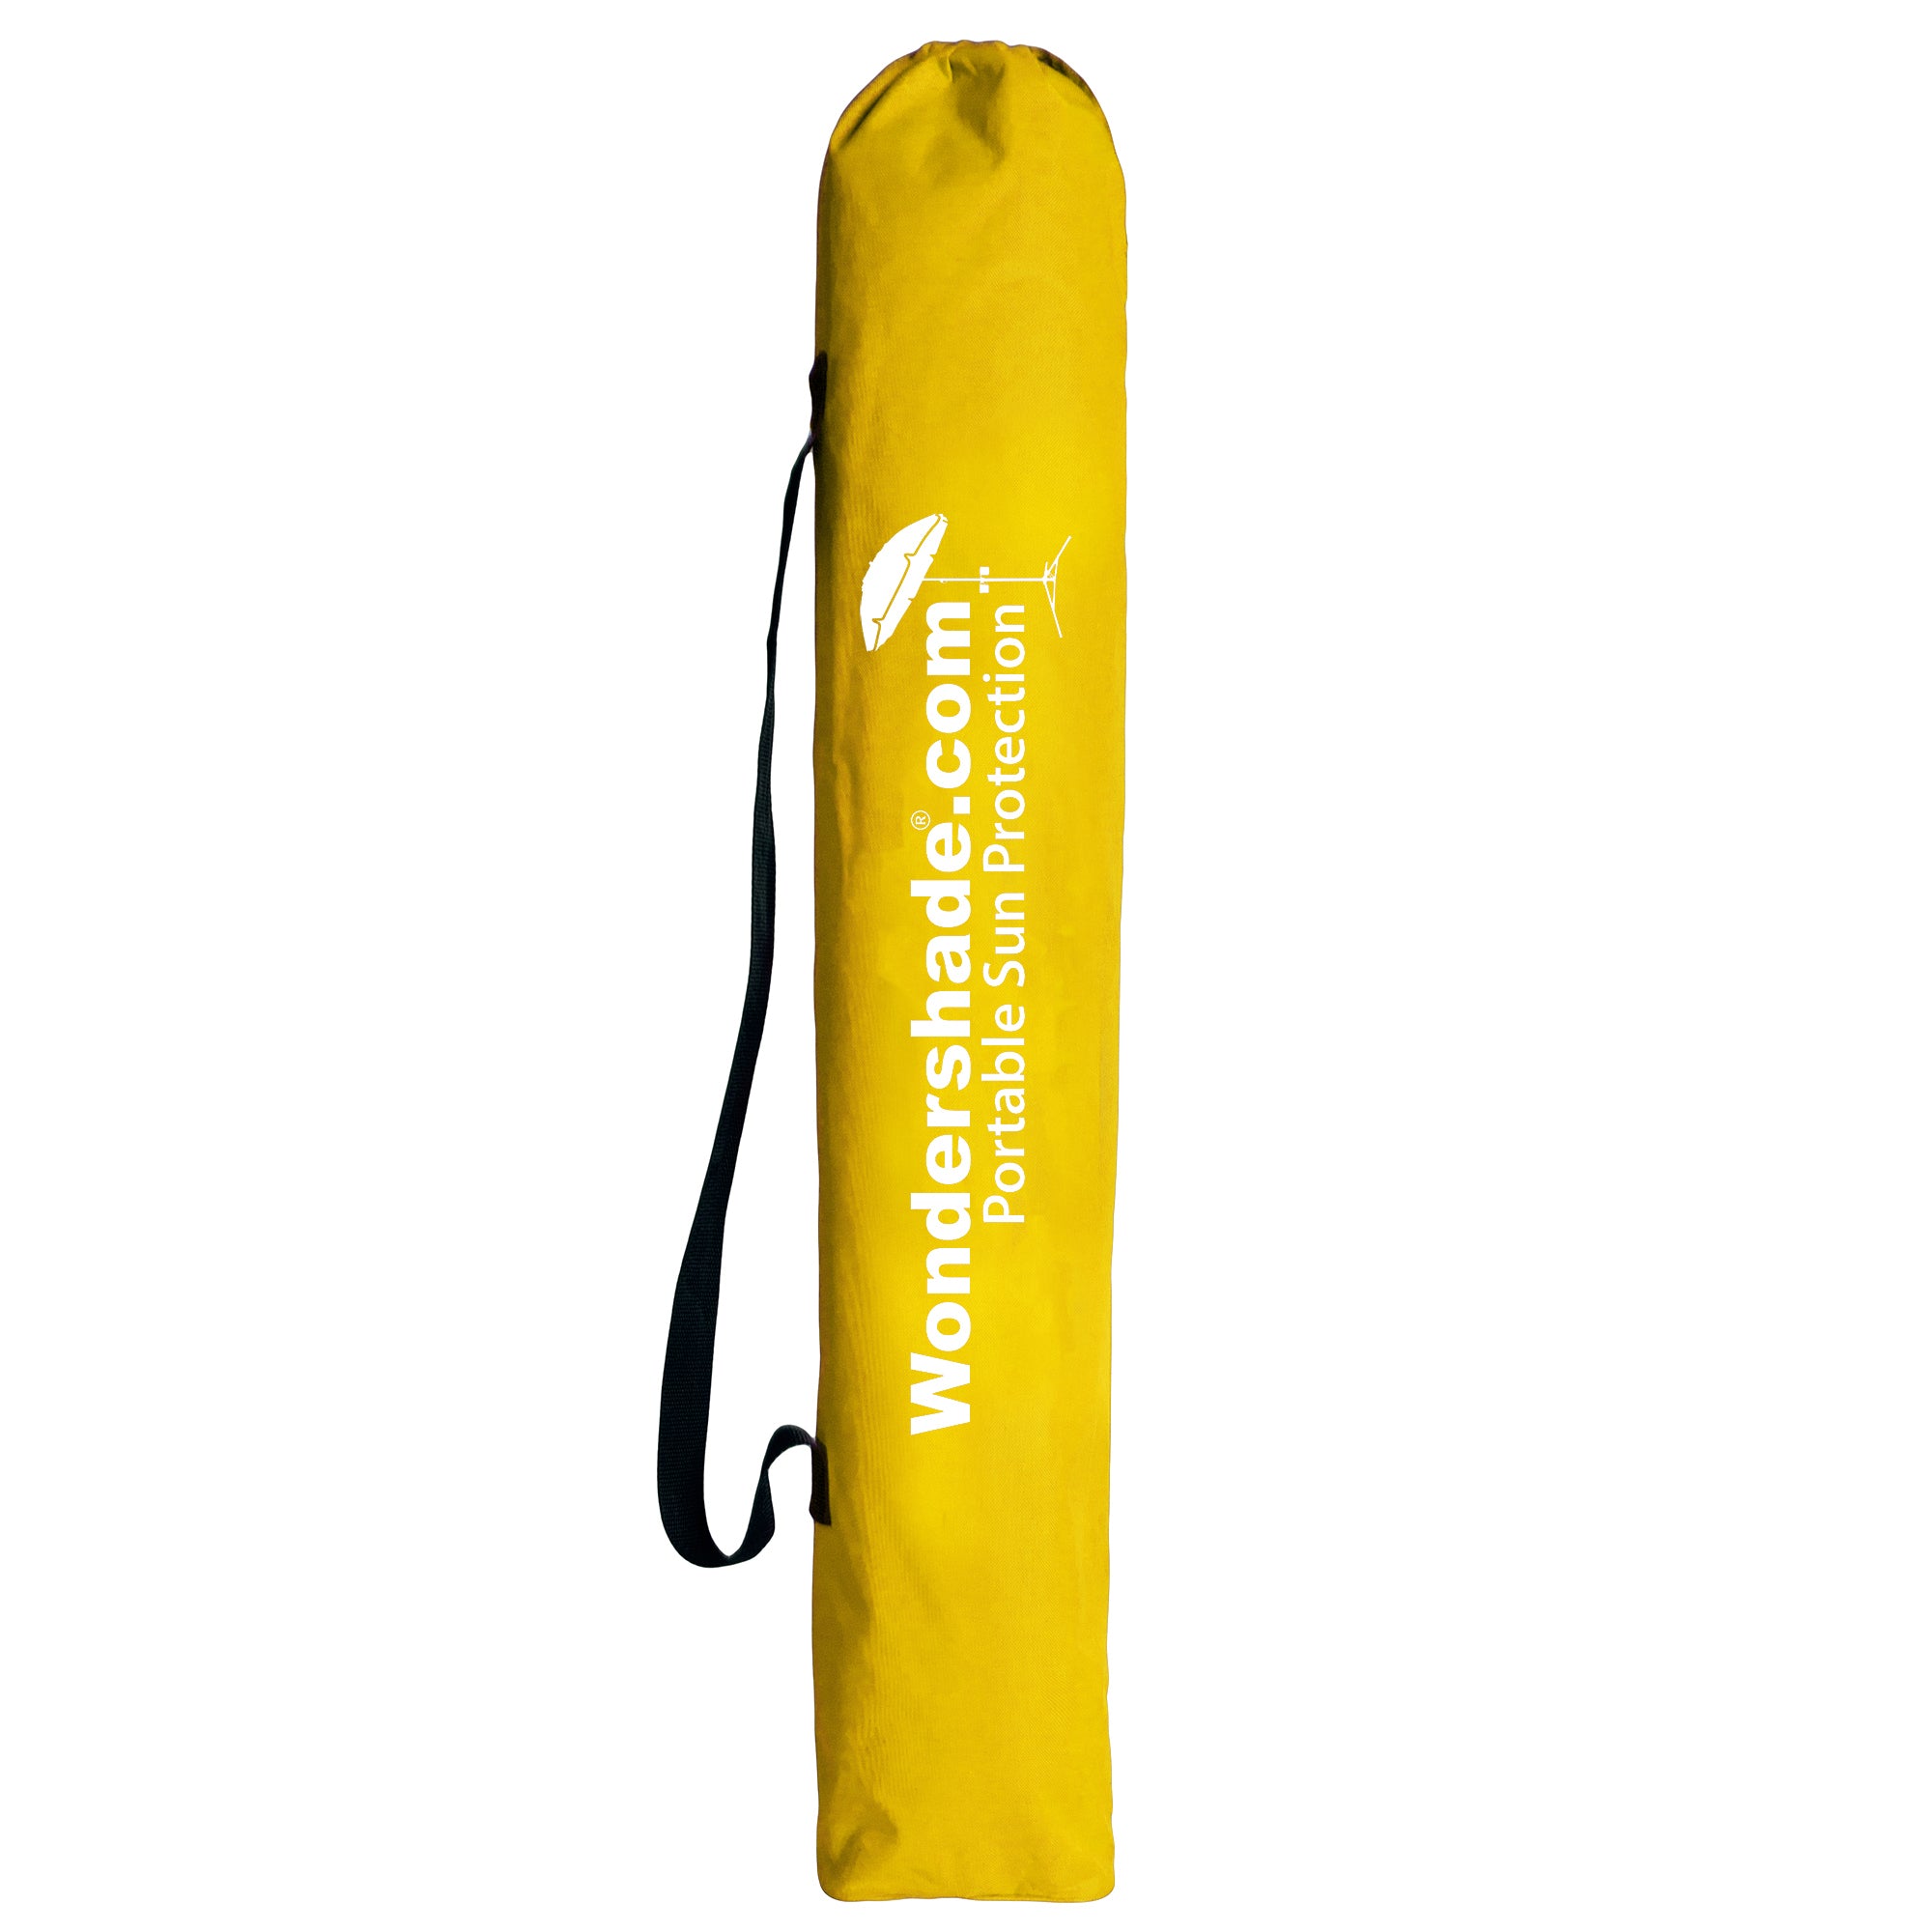 Wondershade Portable Sun Shade Yellow, with cupholders